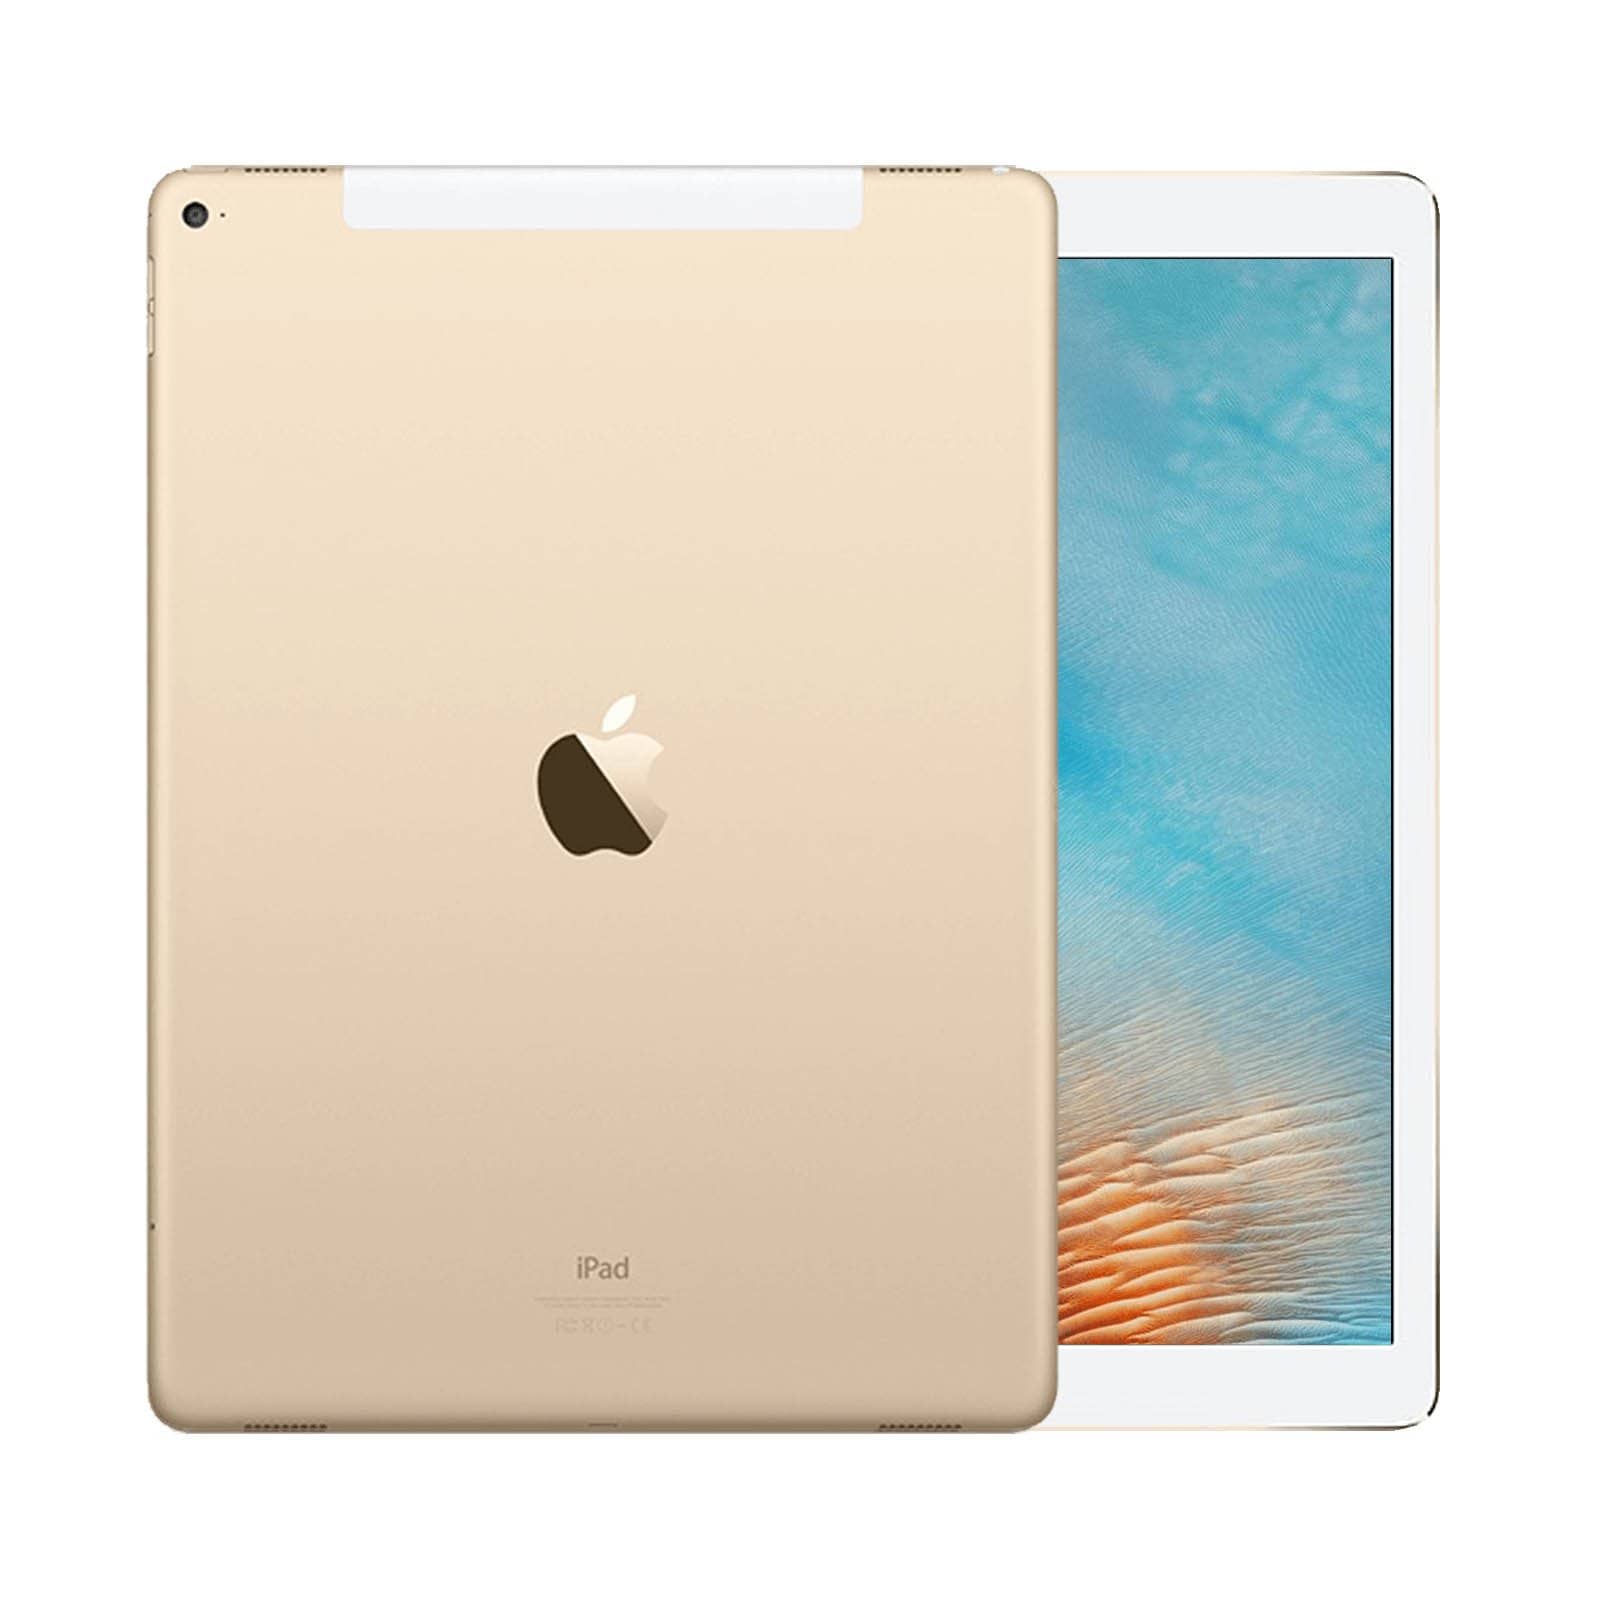 iPad Pro 12.9 Inch 2nd Gen 256GB Gold Good - WiFi 256GB Gold Good